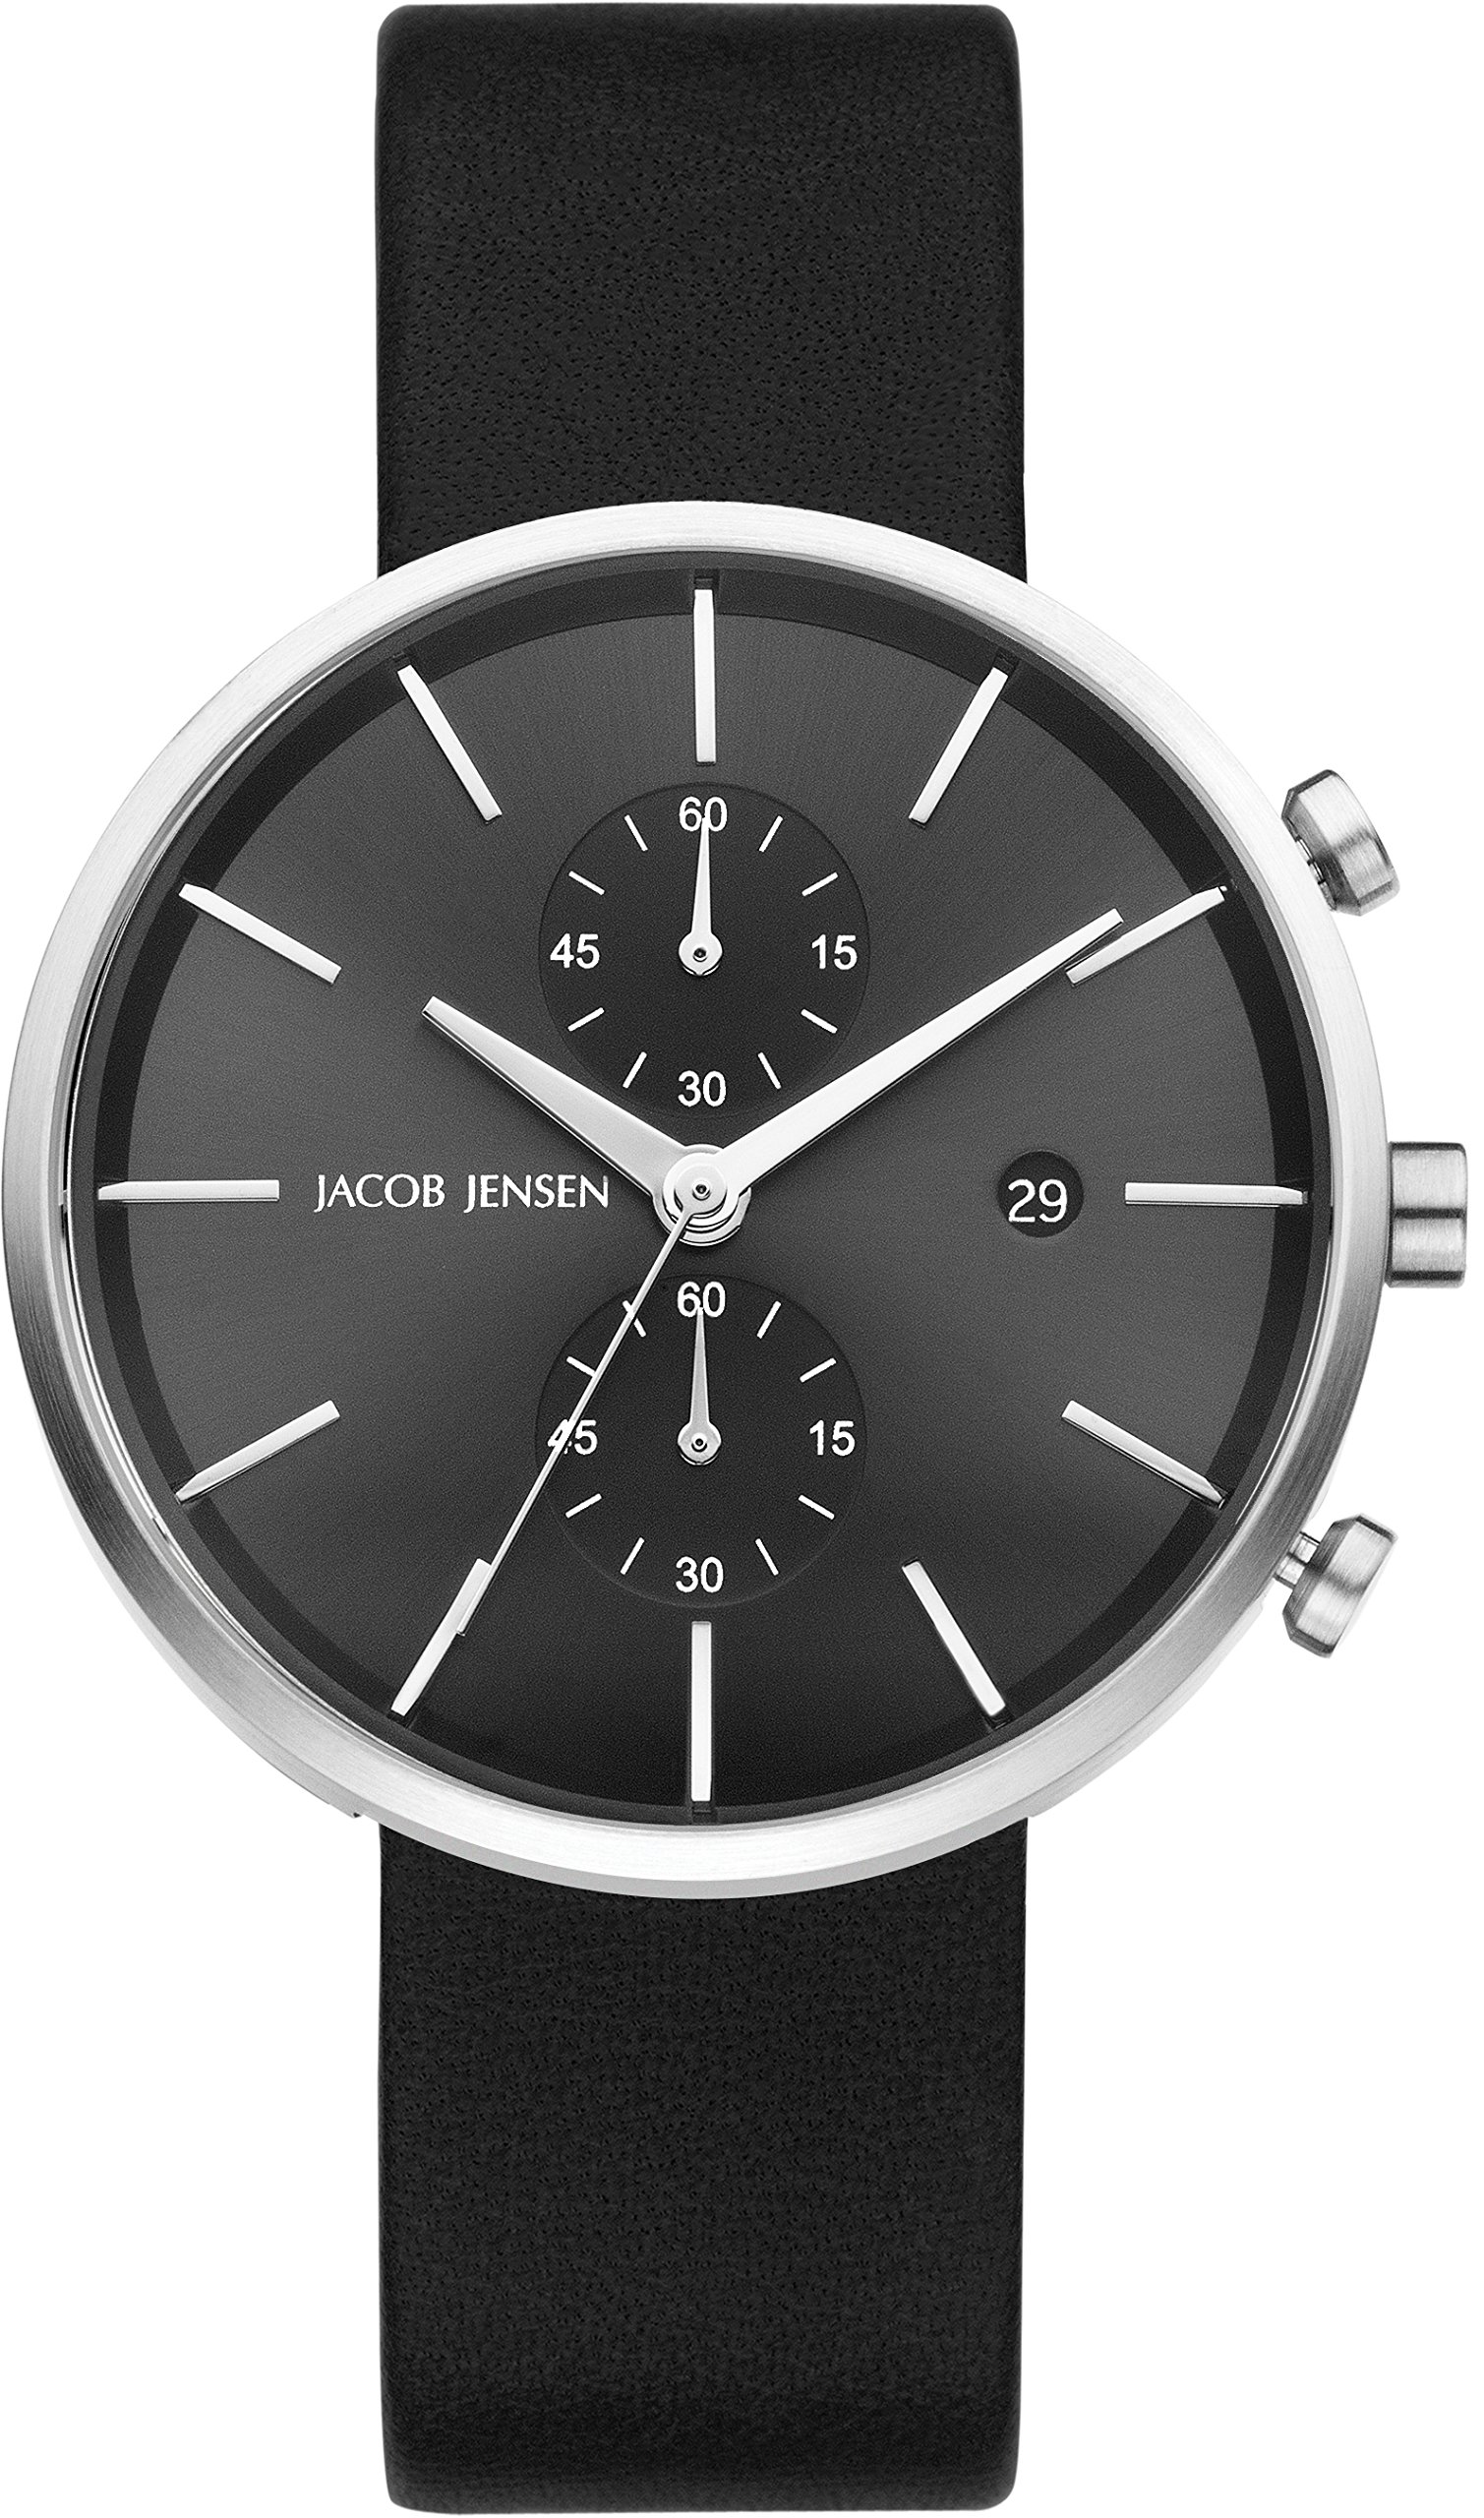 Jacob Jensen Herren Chronograph Quarz Uhr mit Leder Armband 620